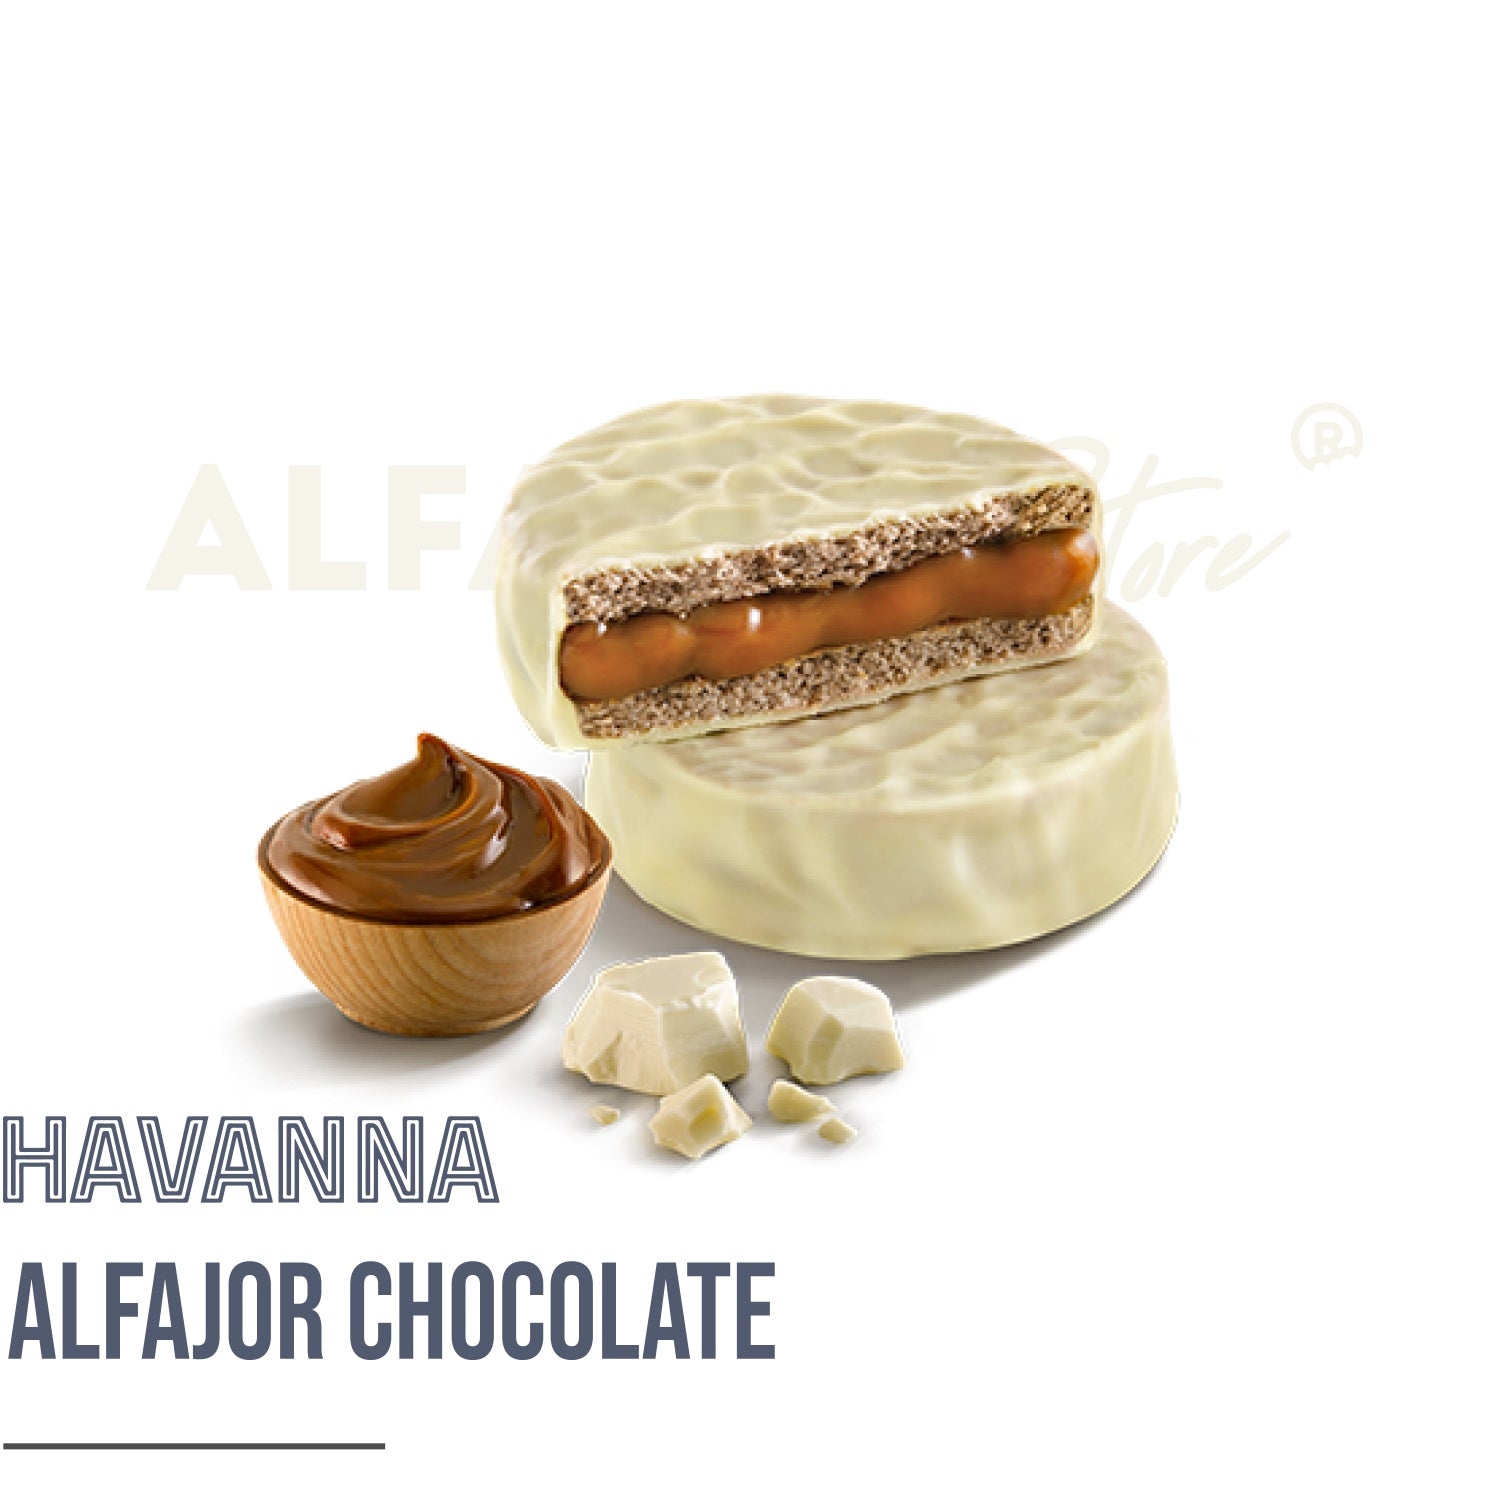 Alfajor Chocolate | Havanna Alfajor Store